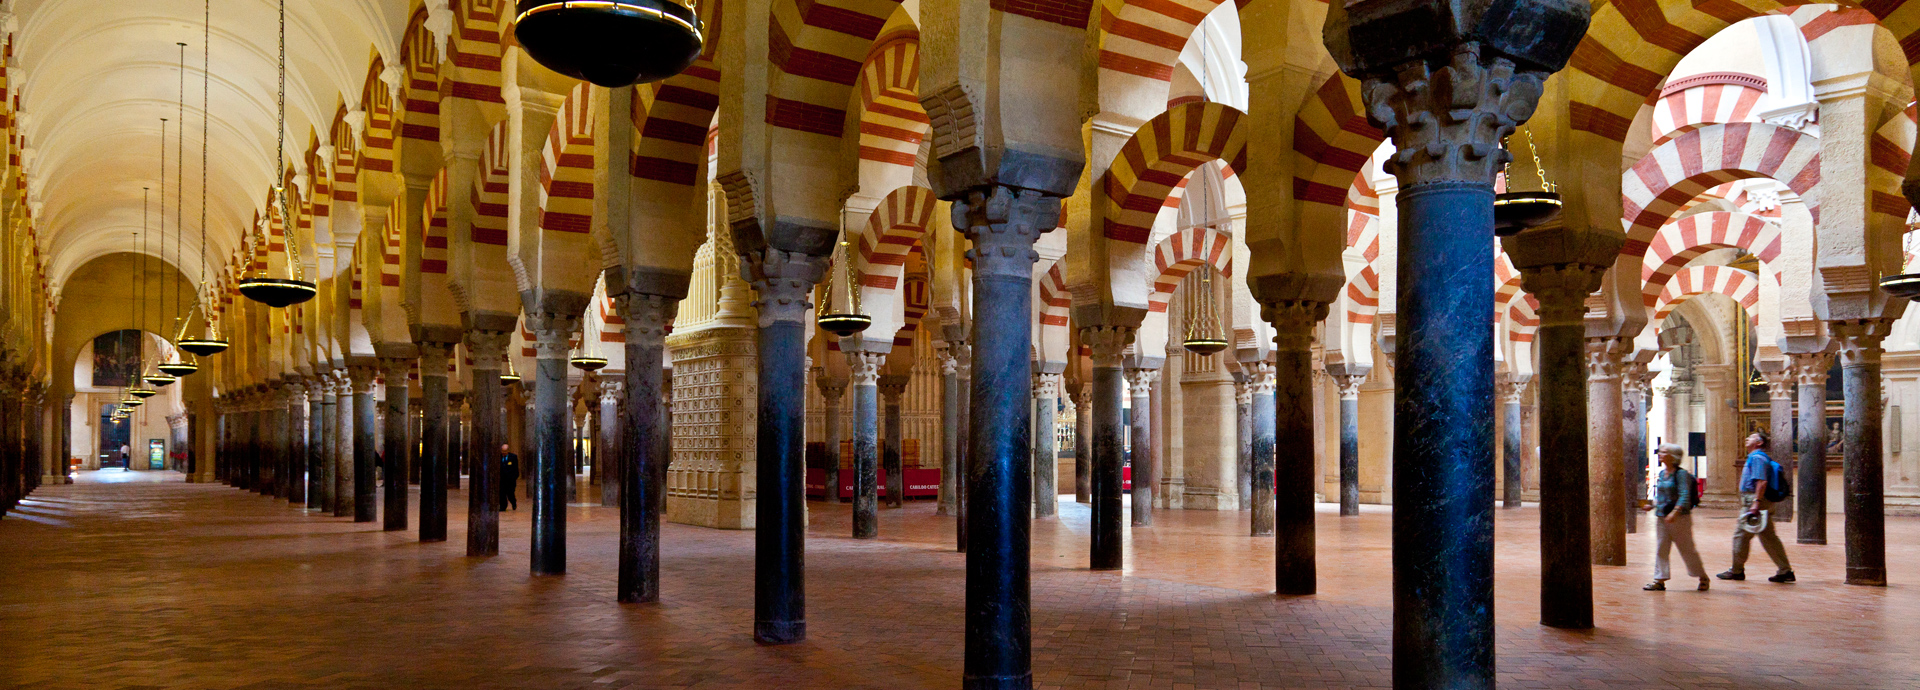 Mezquita-Catedral de Córdoba, Patrimonio de la Humanidad por la UNESCO